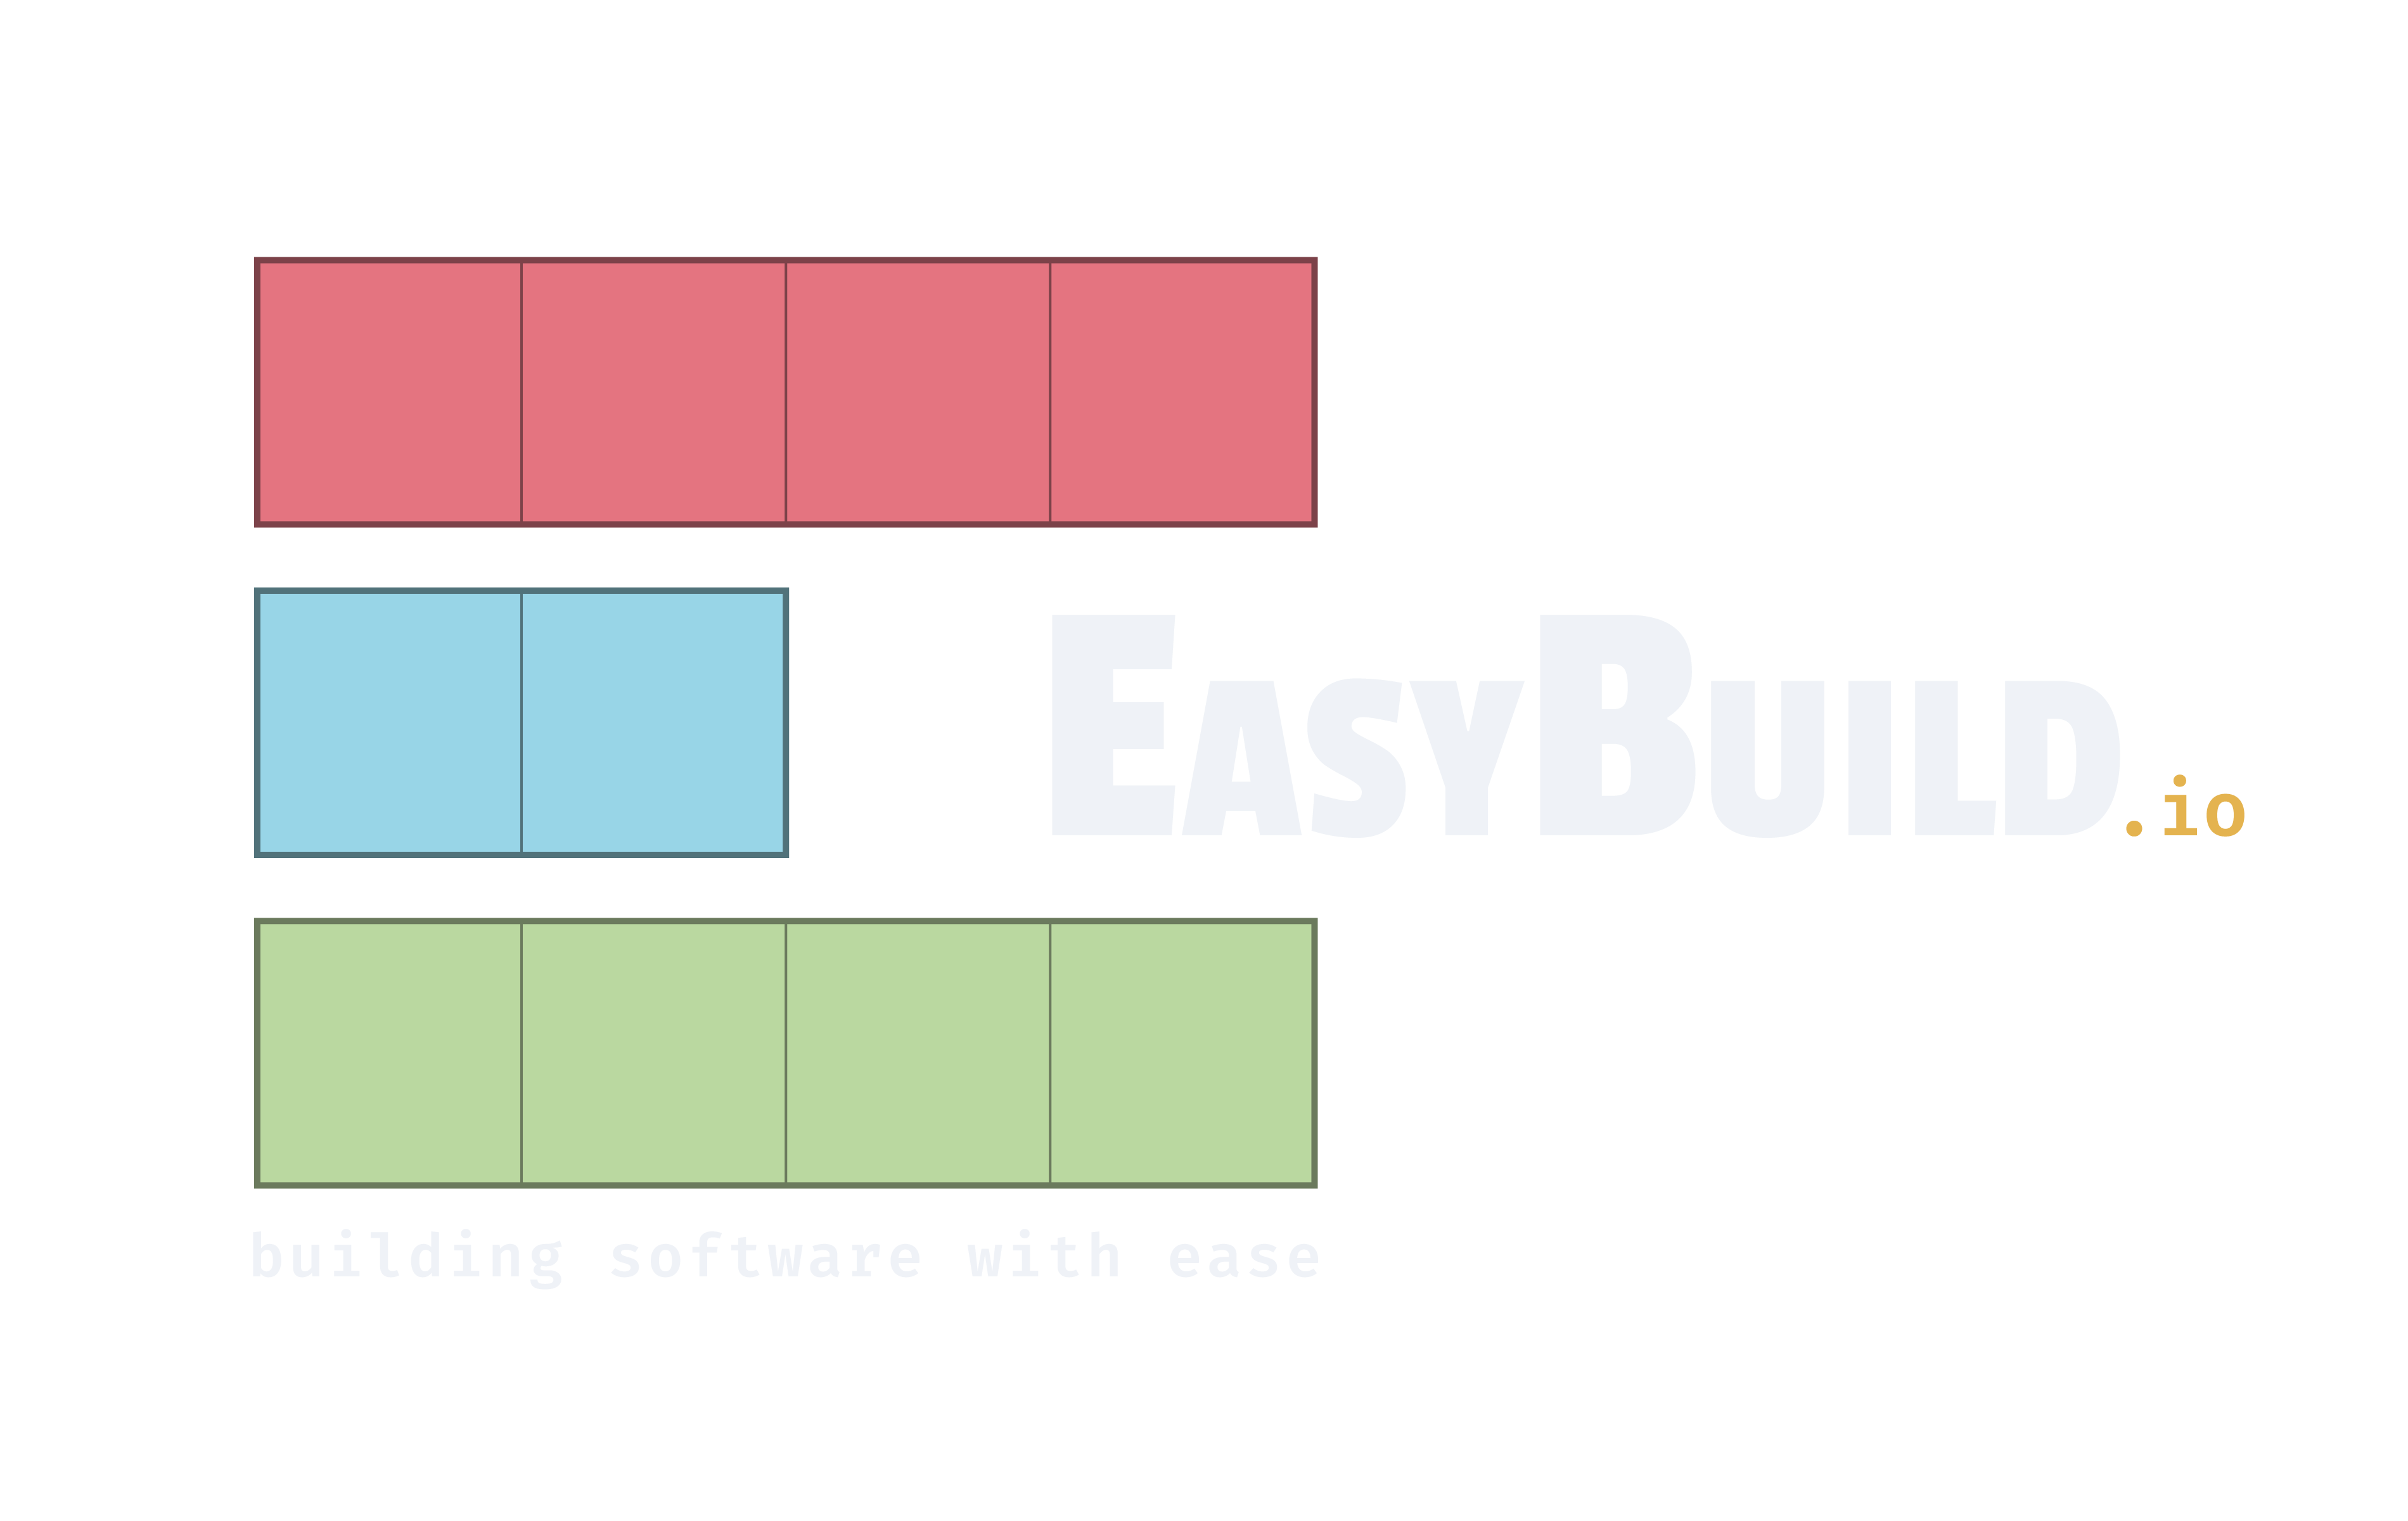 https://github.com/easybuilders/easybuild/raw/develop/logo/png/easybuild_logo_2022_horizontal_dark_bg_transparent.png